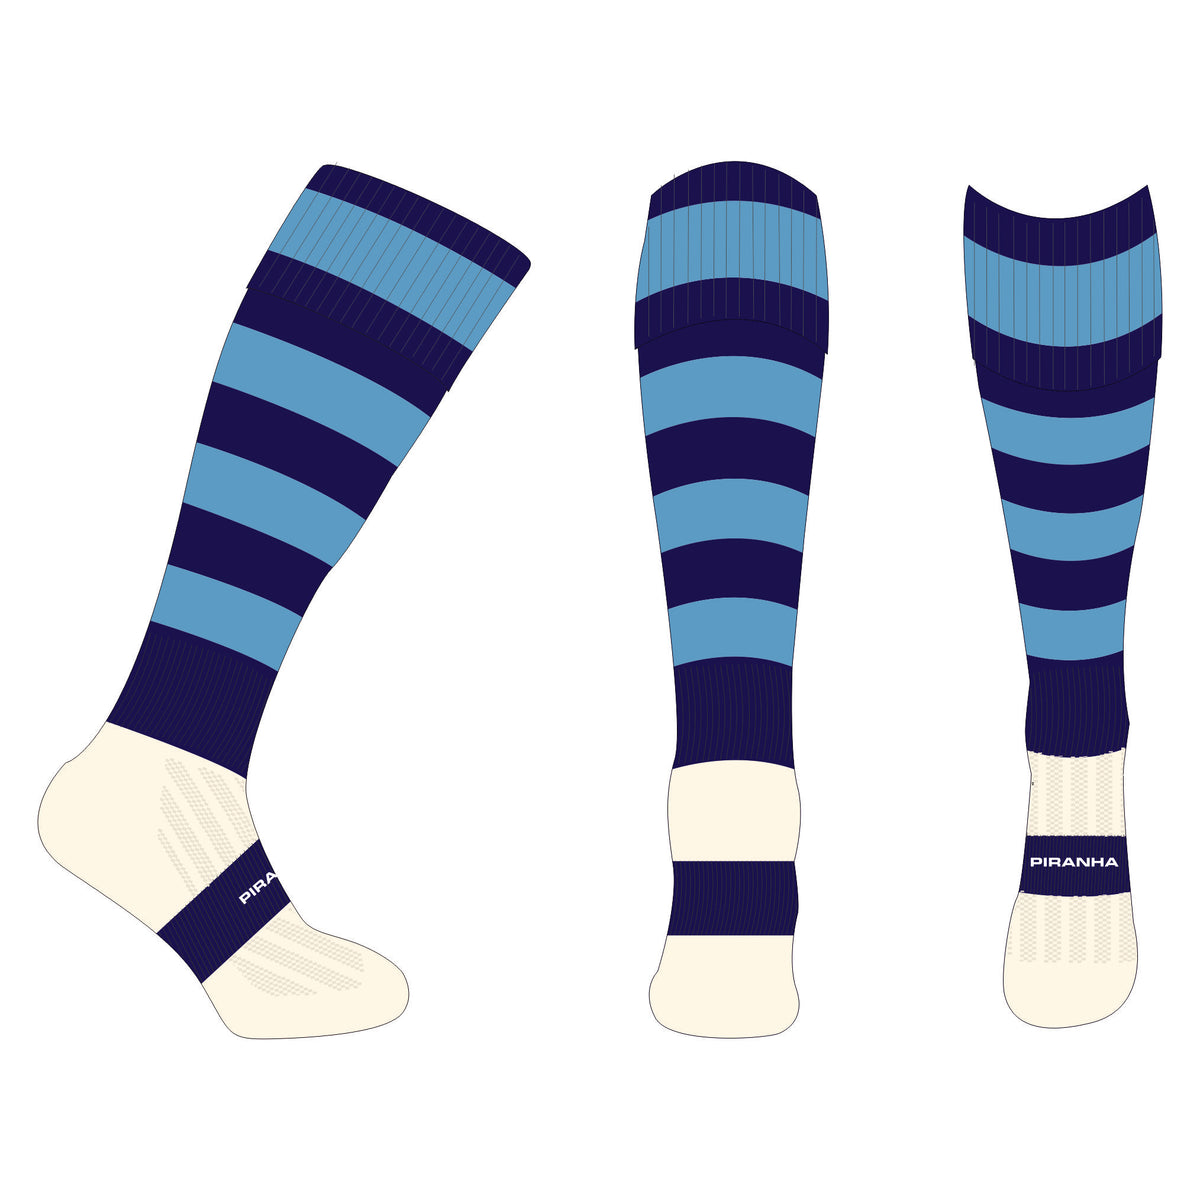 Gayhurst School Games Socks